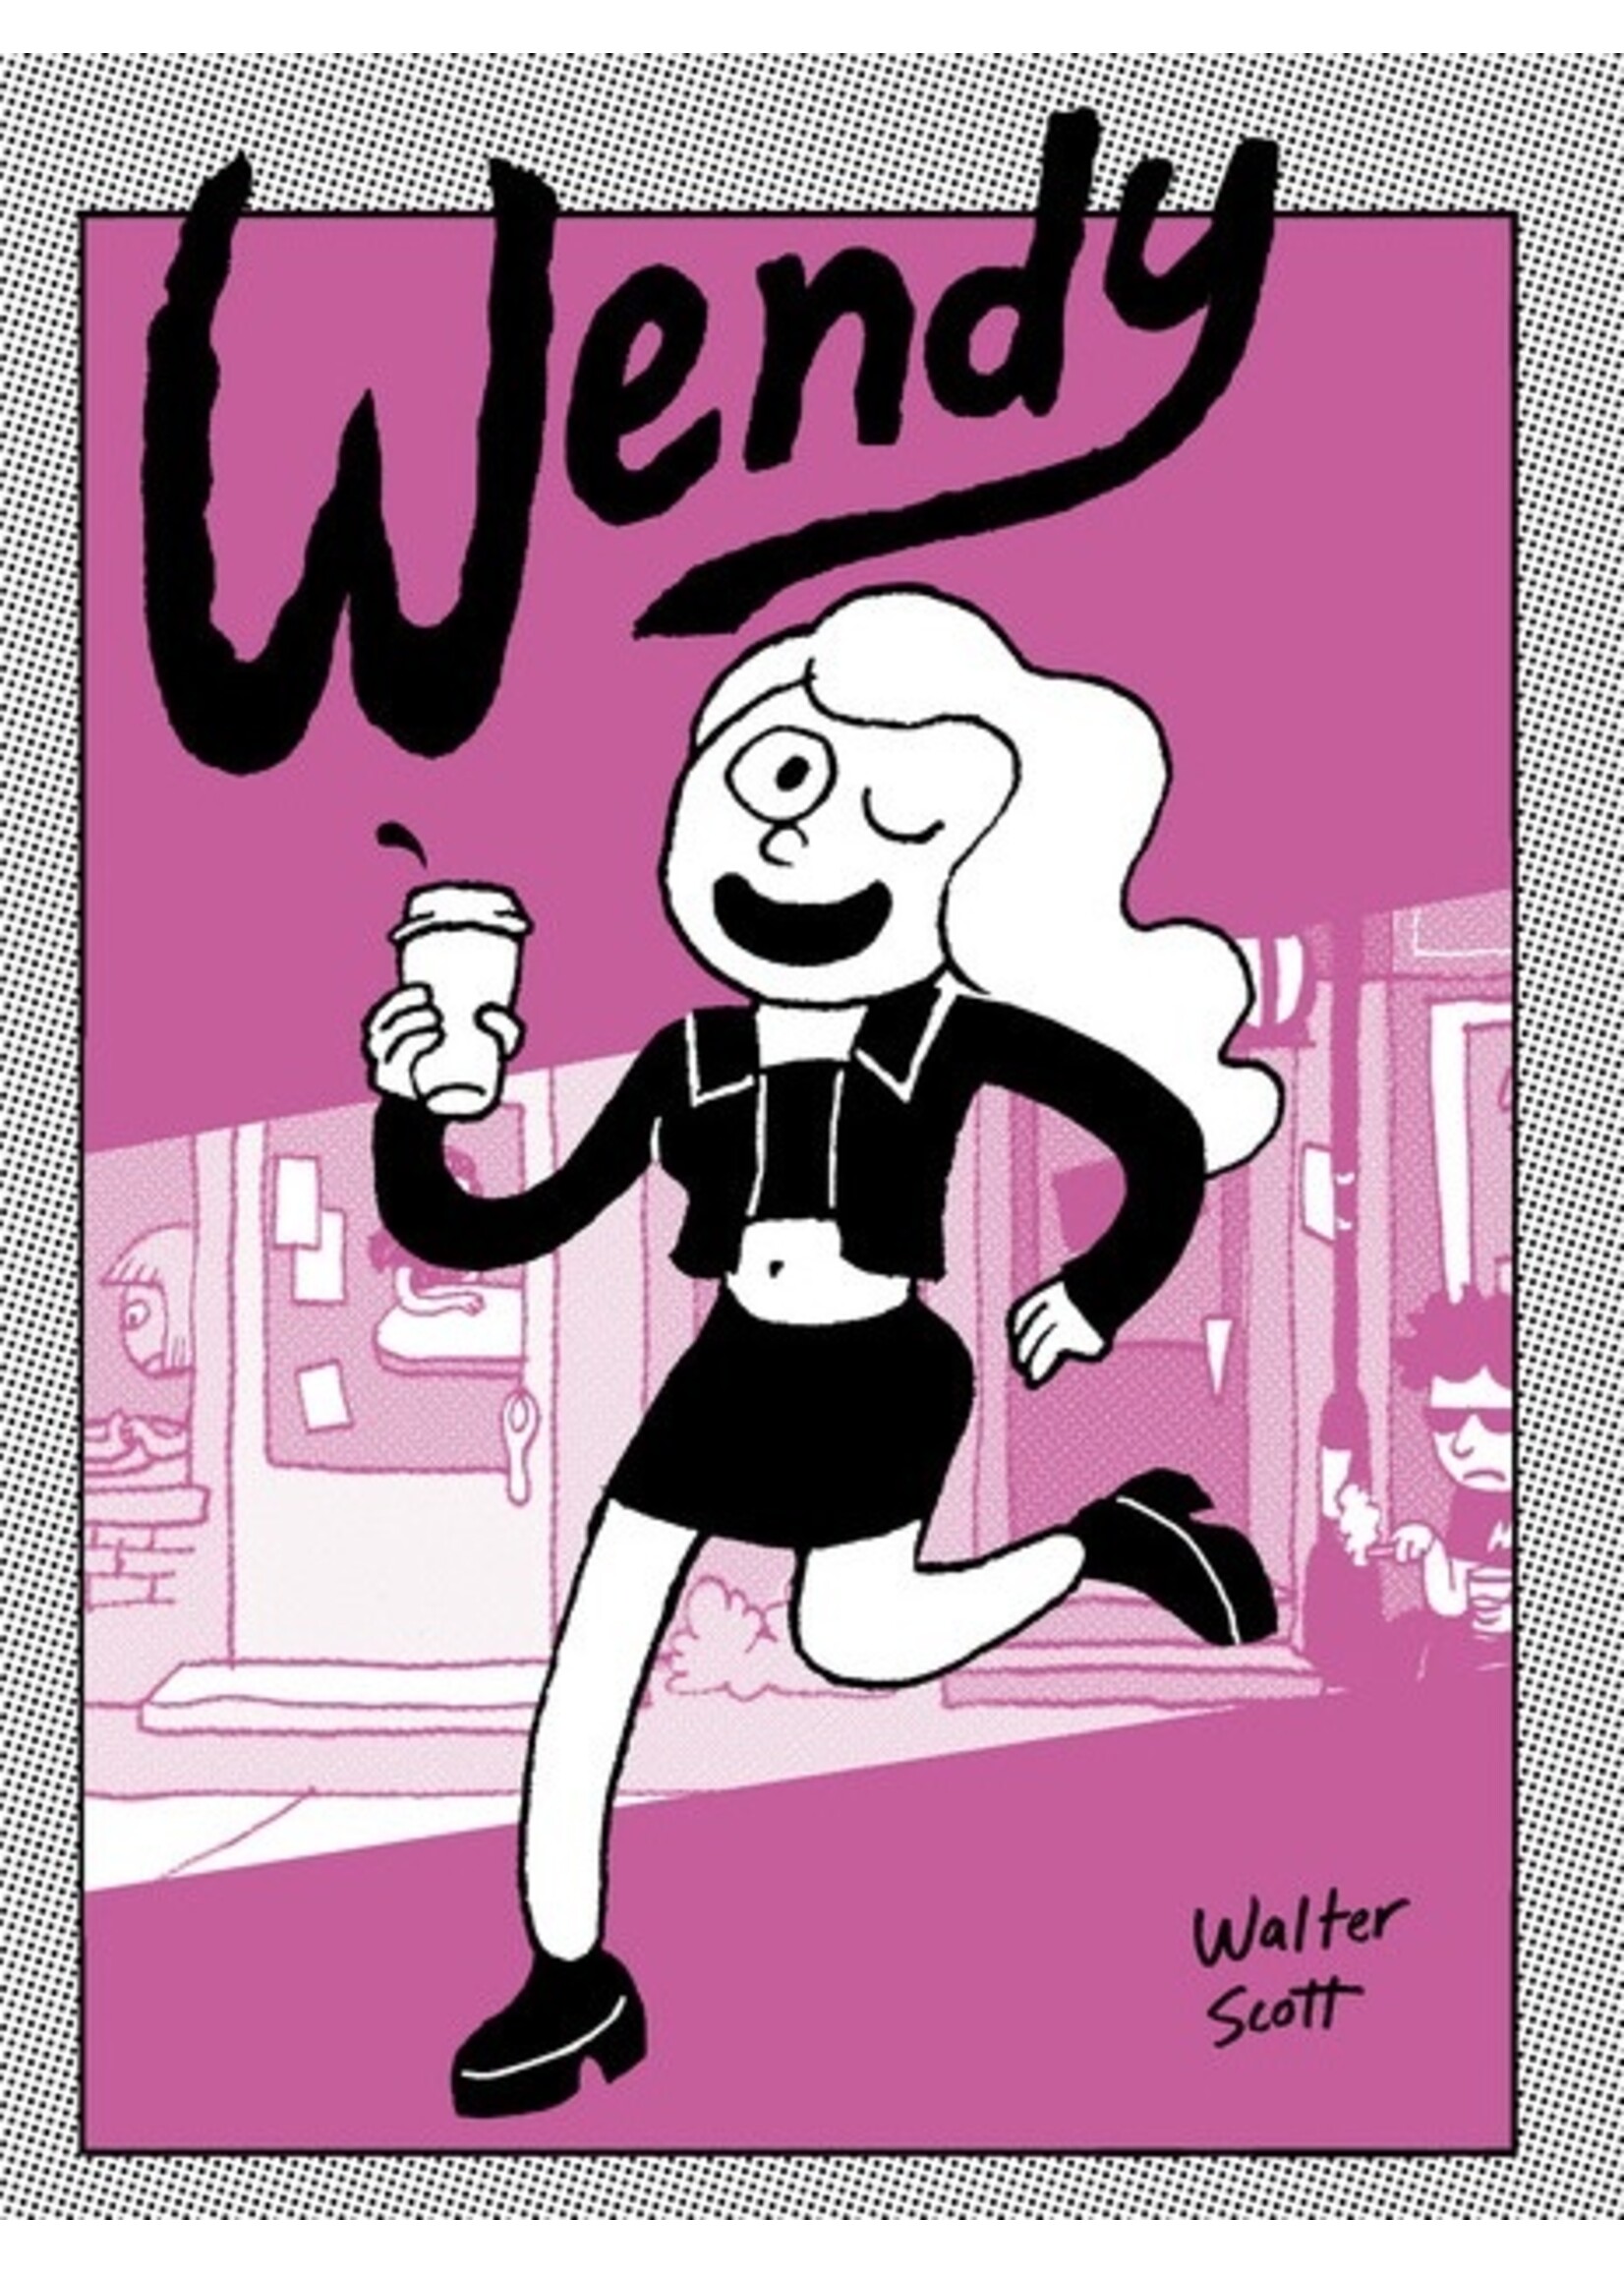 Drawn & Quarterly "Wendy" by Walter Scott